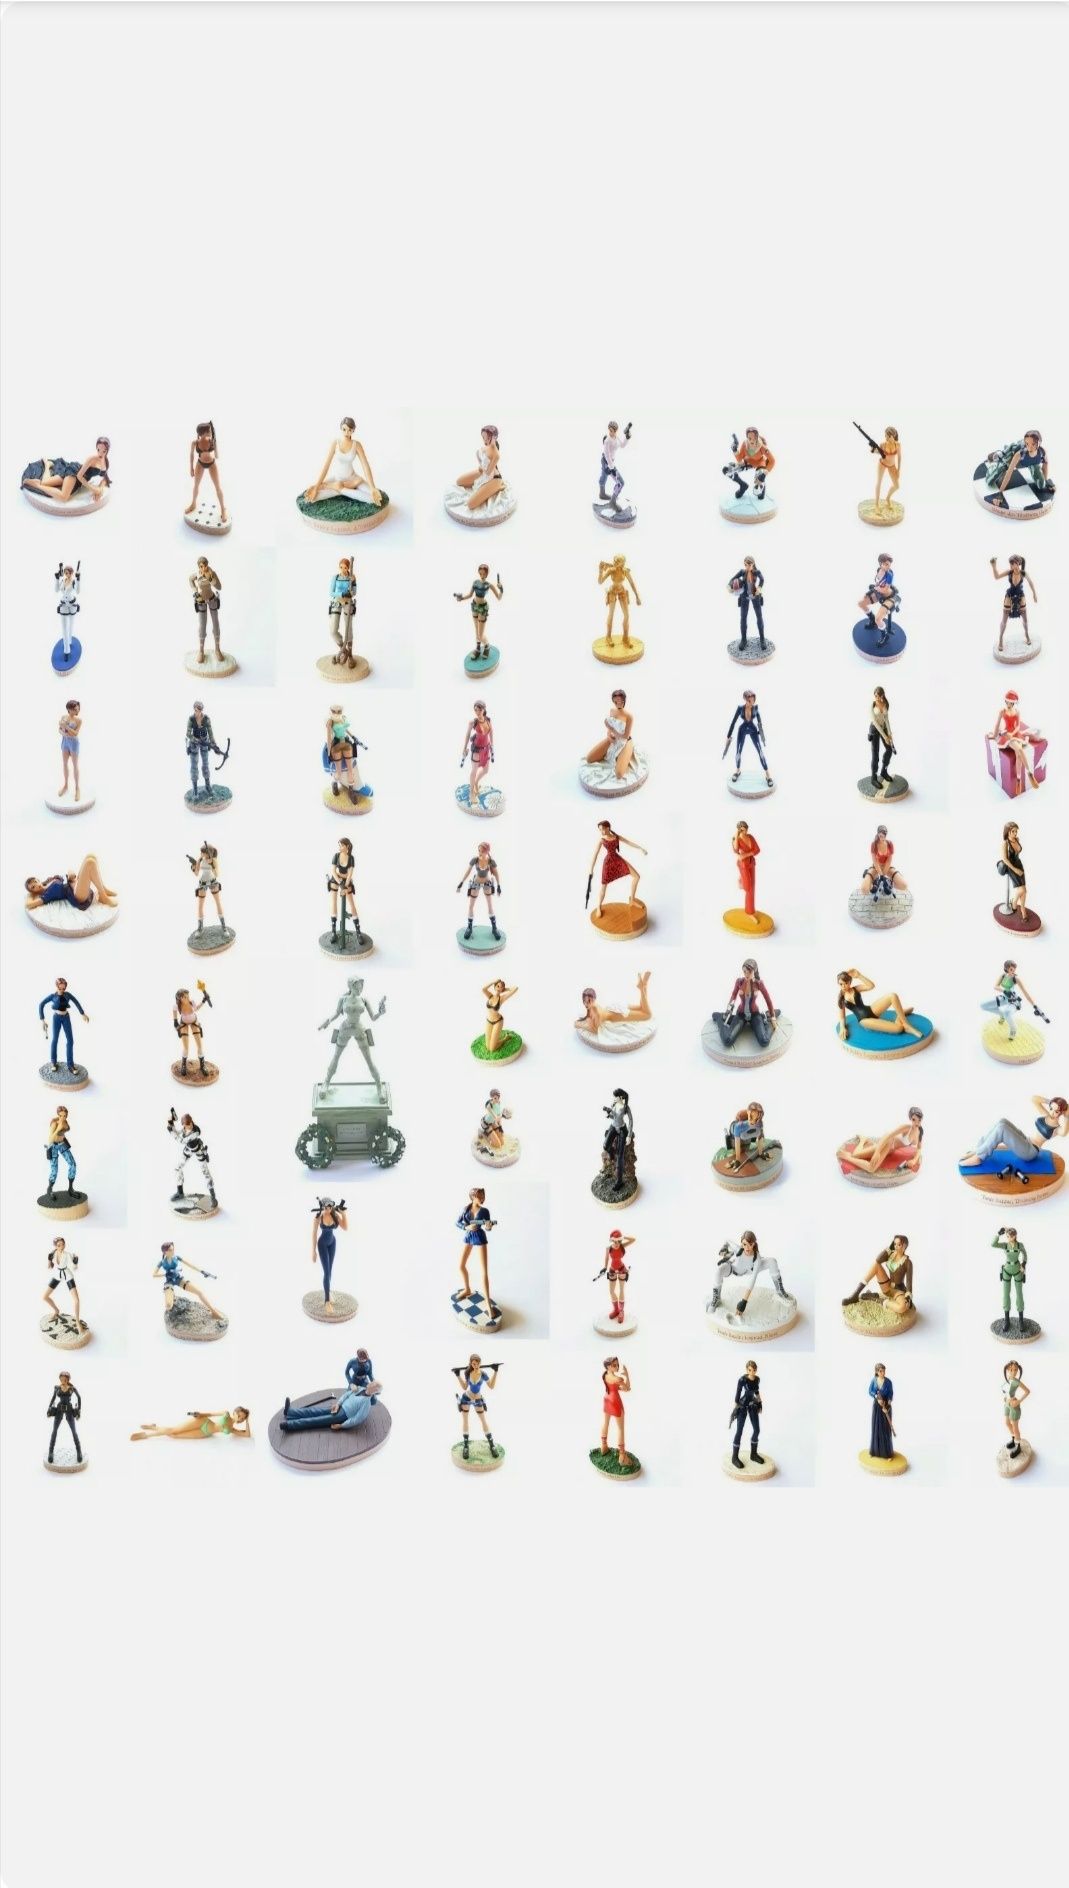 TOMB RAIDER lara croft pełny kompletny zestaw ponad 60 figurek